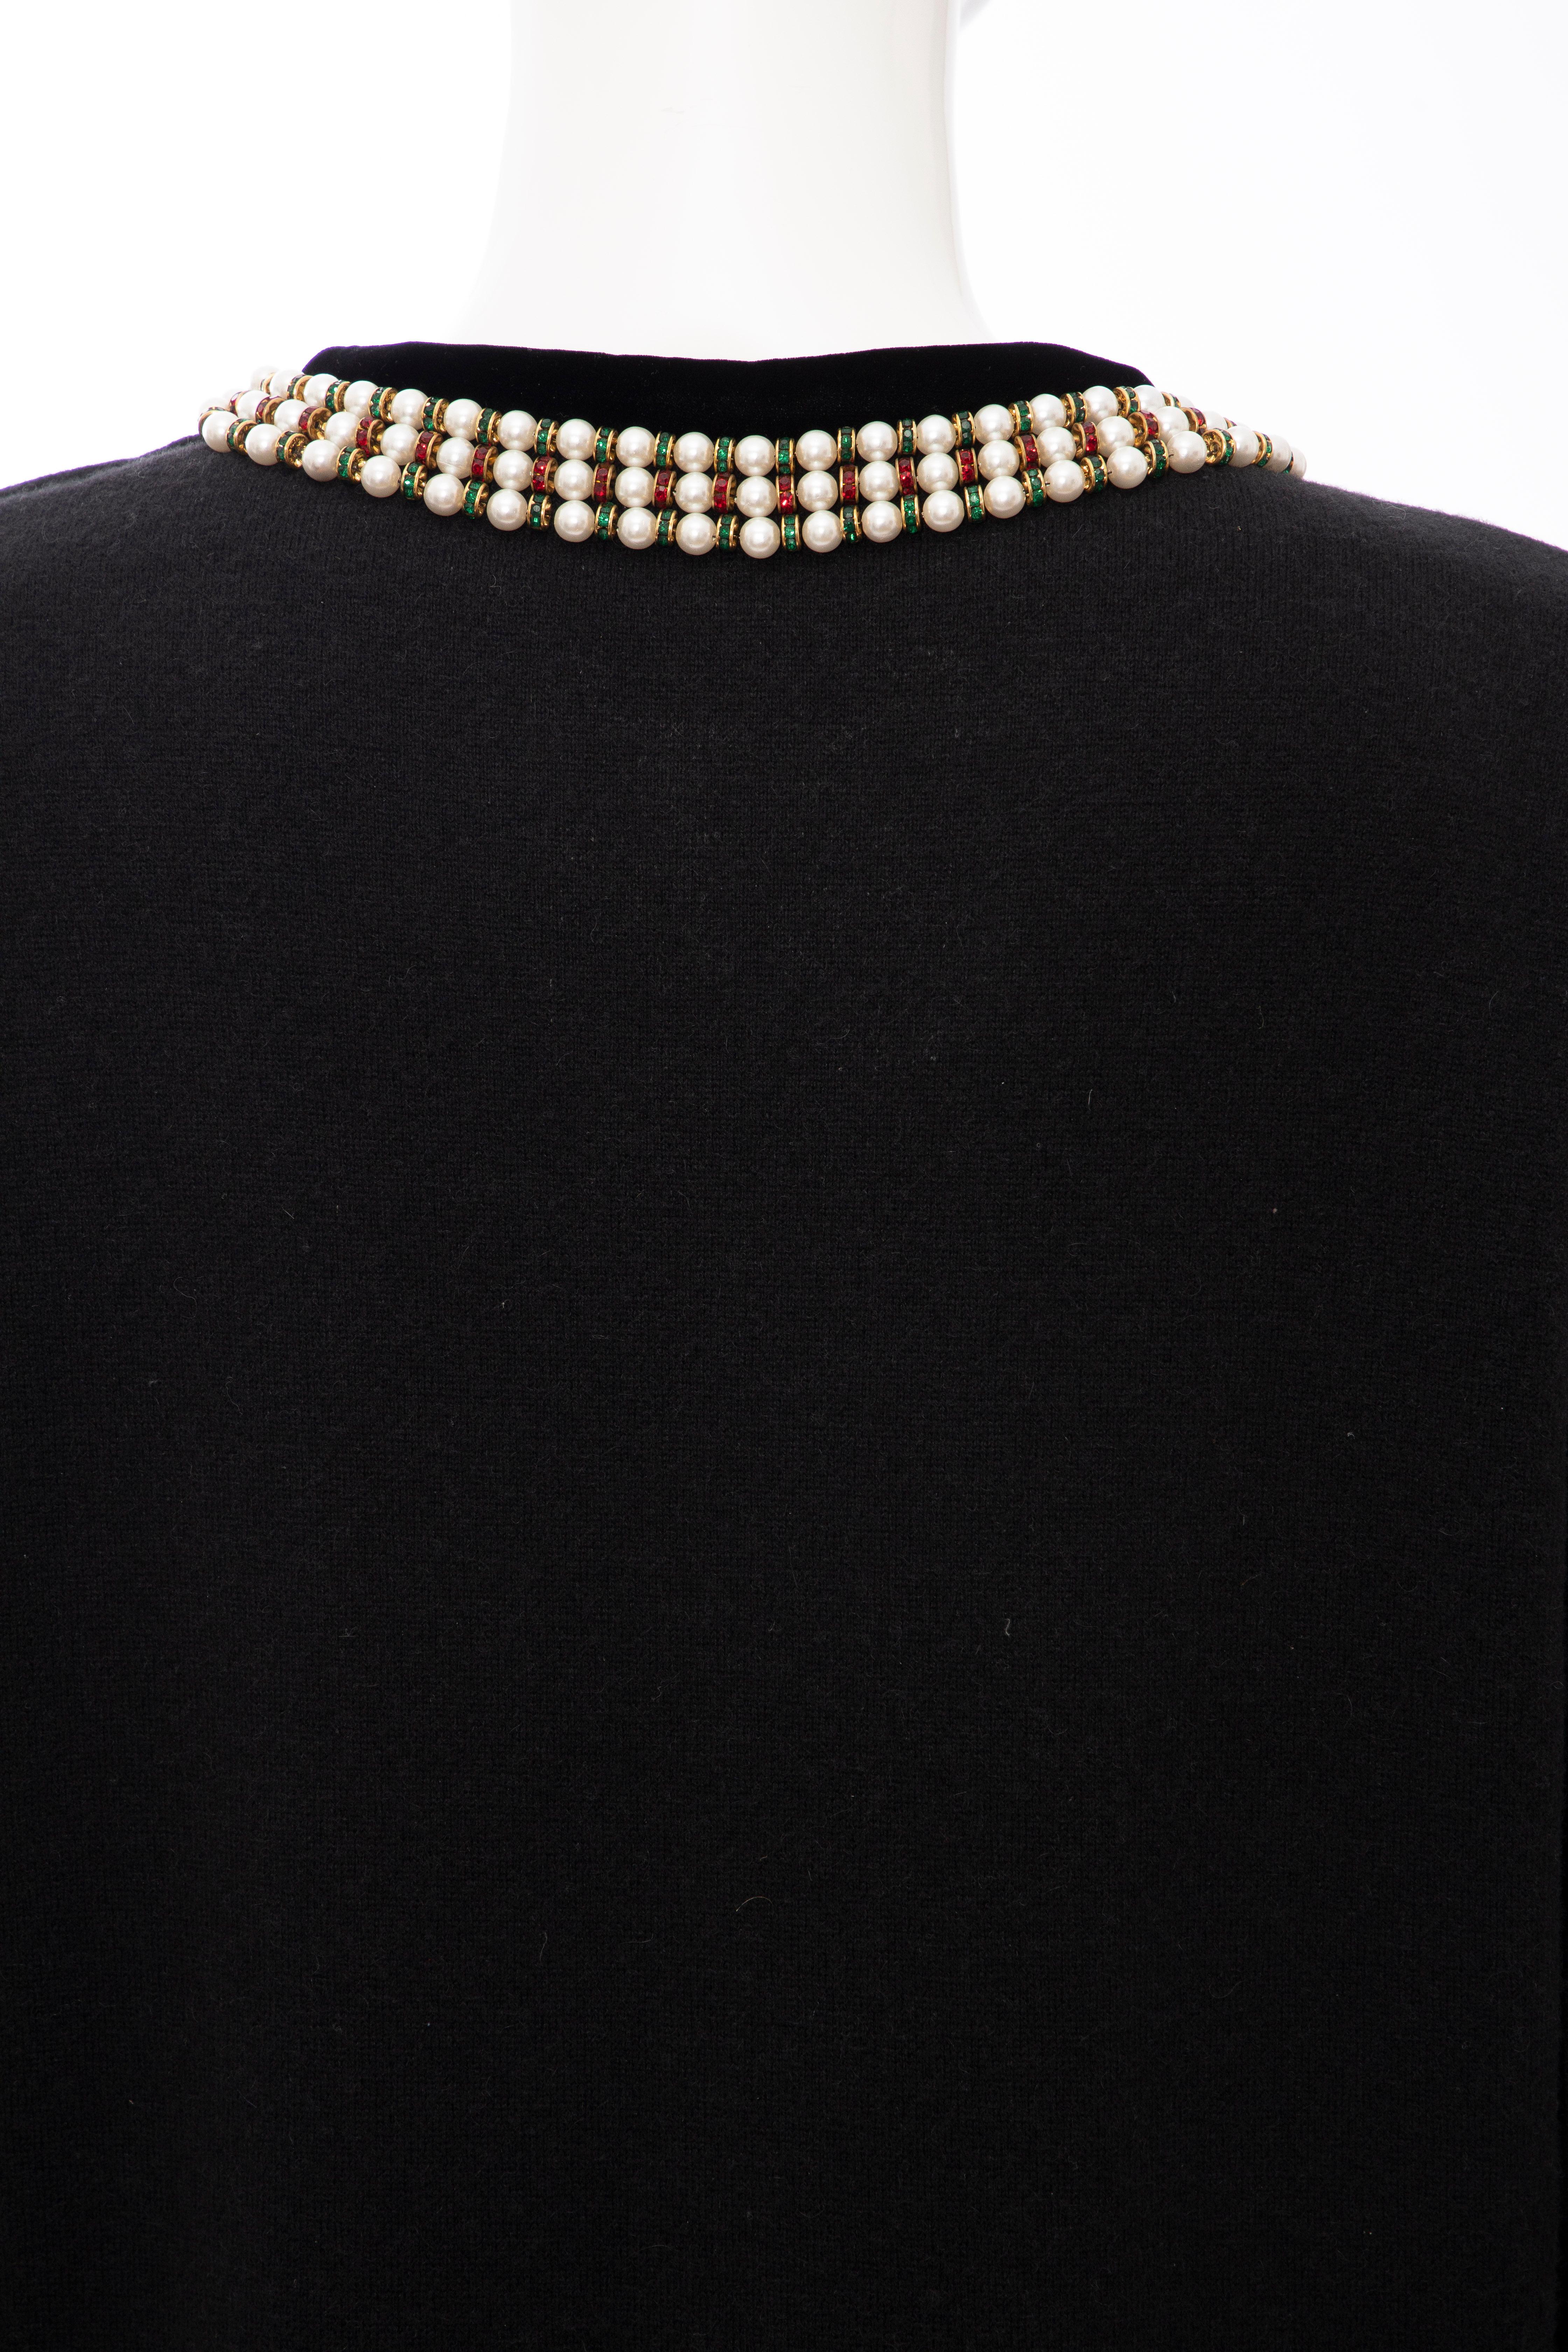 Oscar de la Renta Runway Black Embroidered Neckline Sweater Dress, Fall 1984 For Sale 3